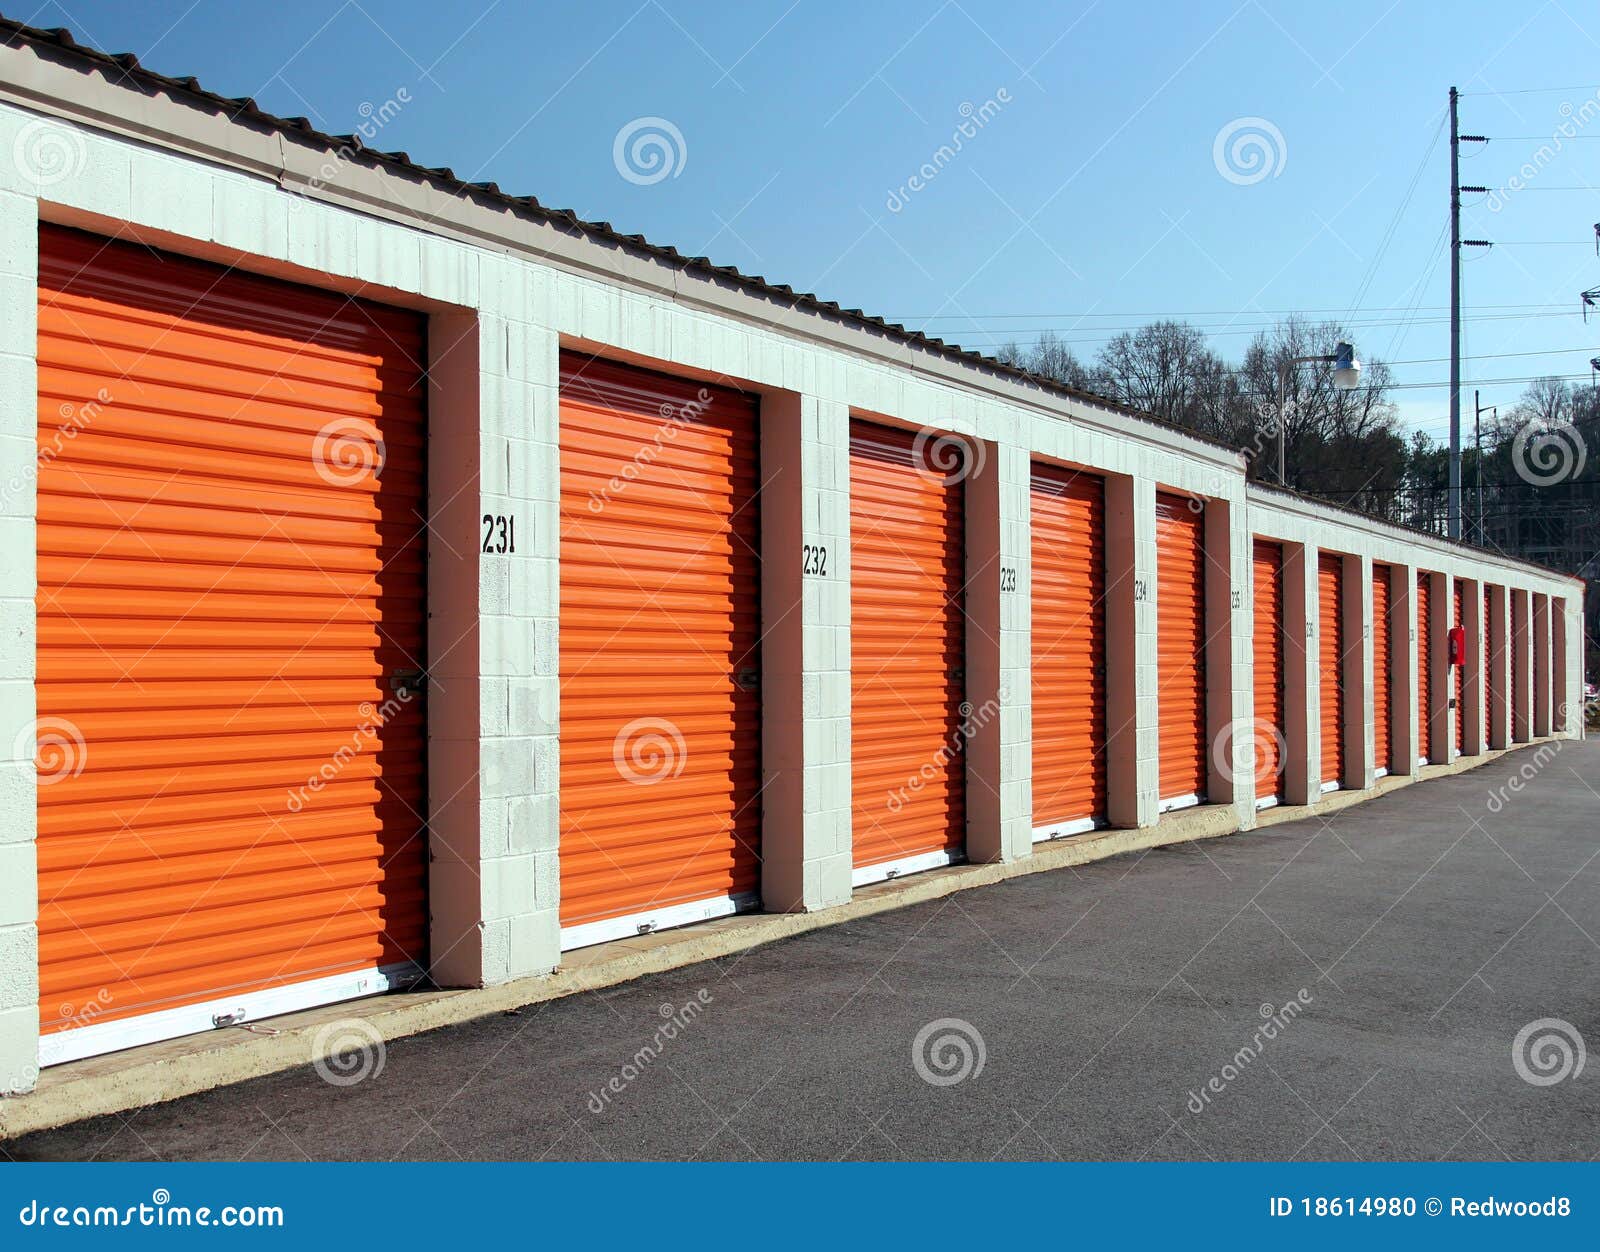 bank of self storage units